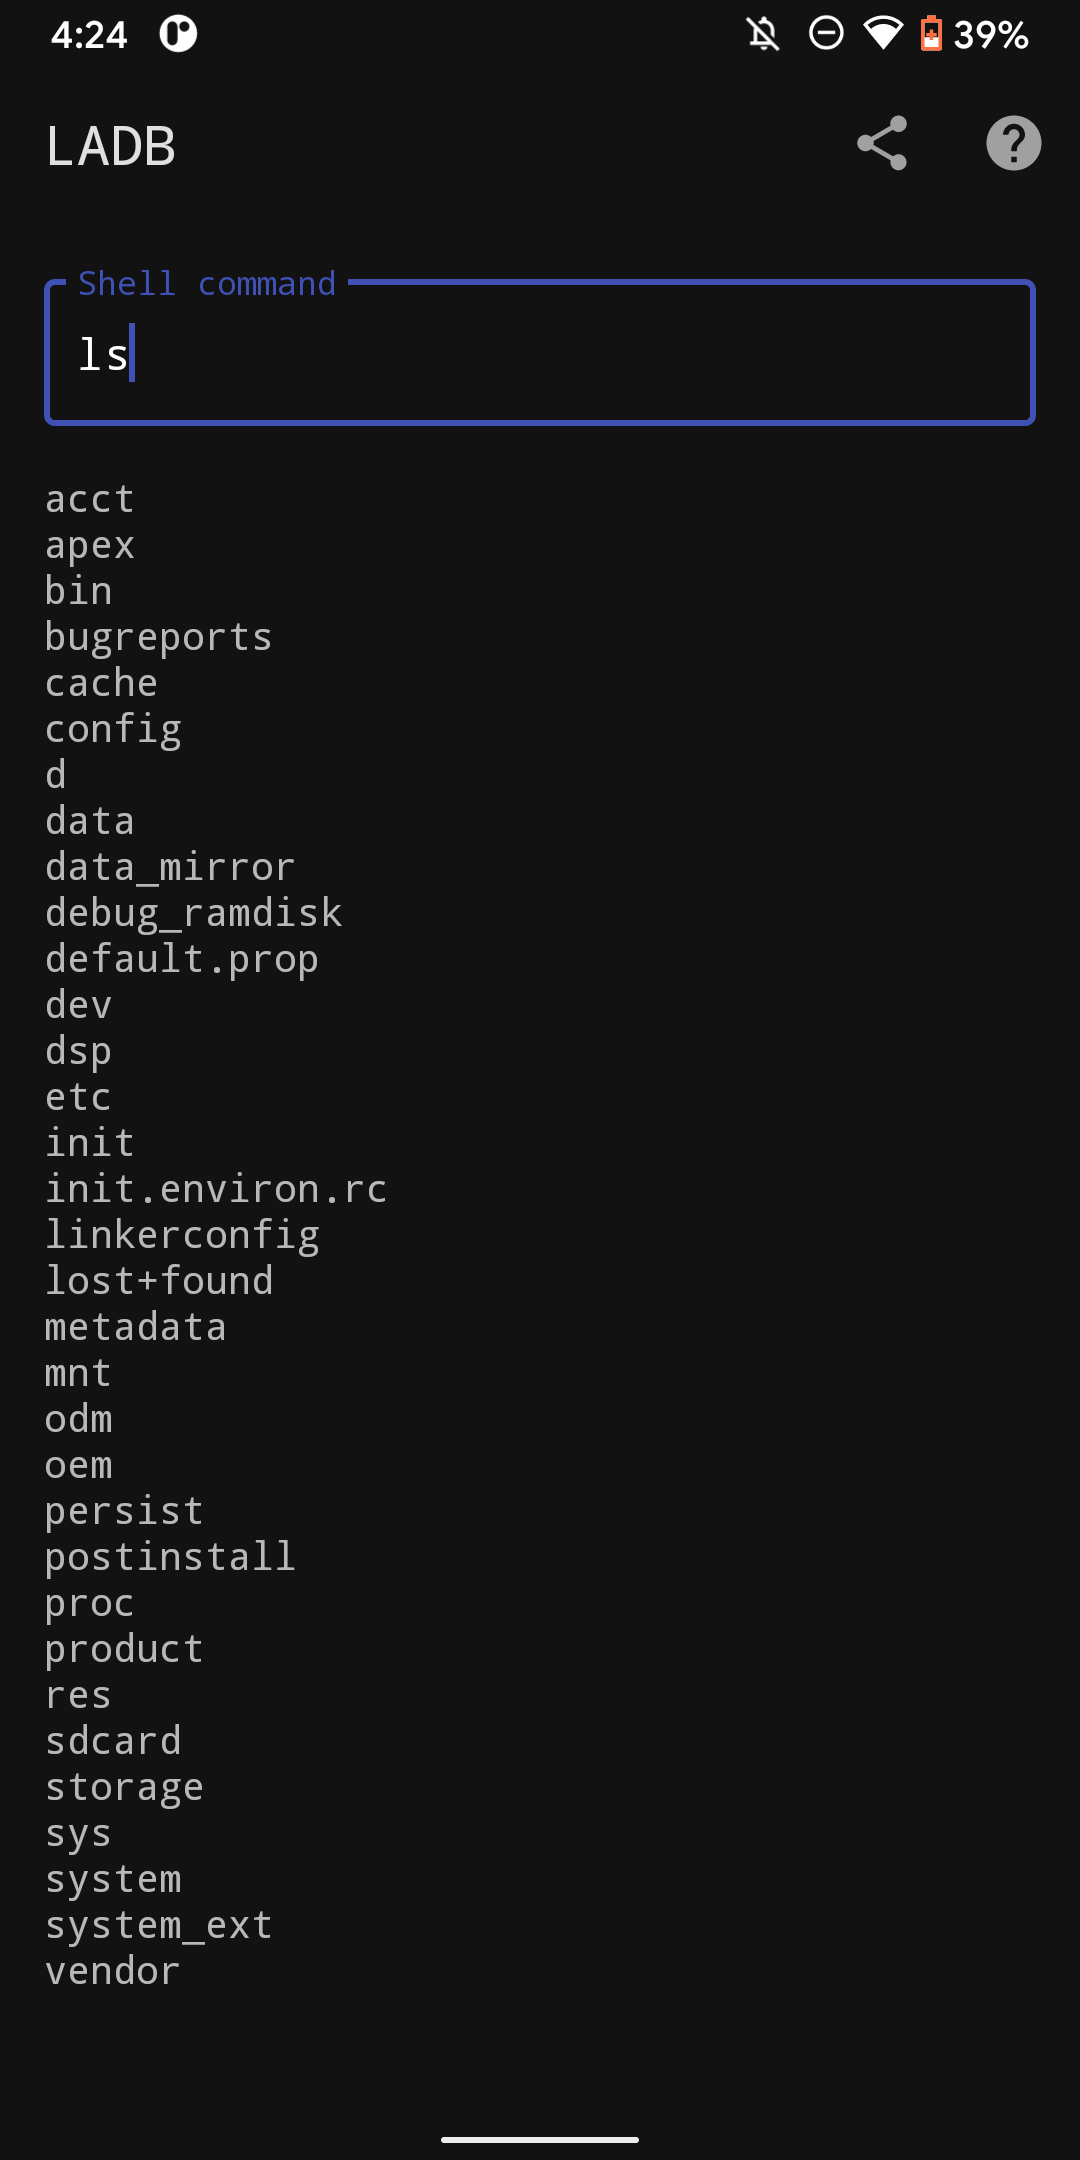 Screenshot showing LADB's command entry tool